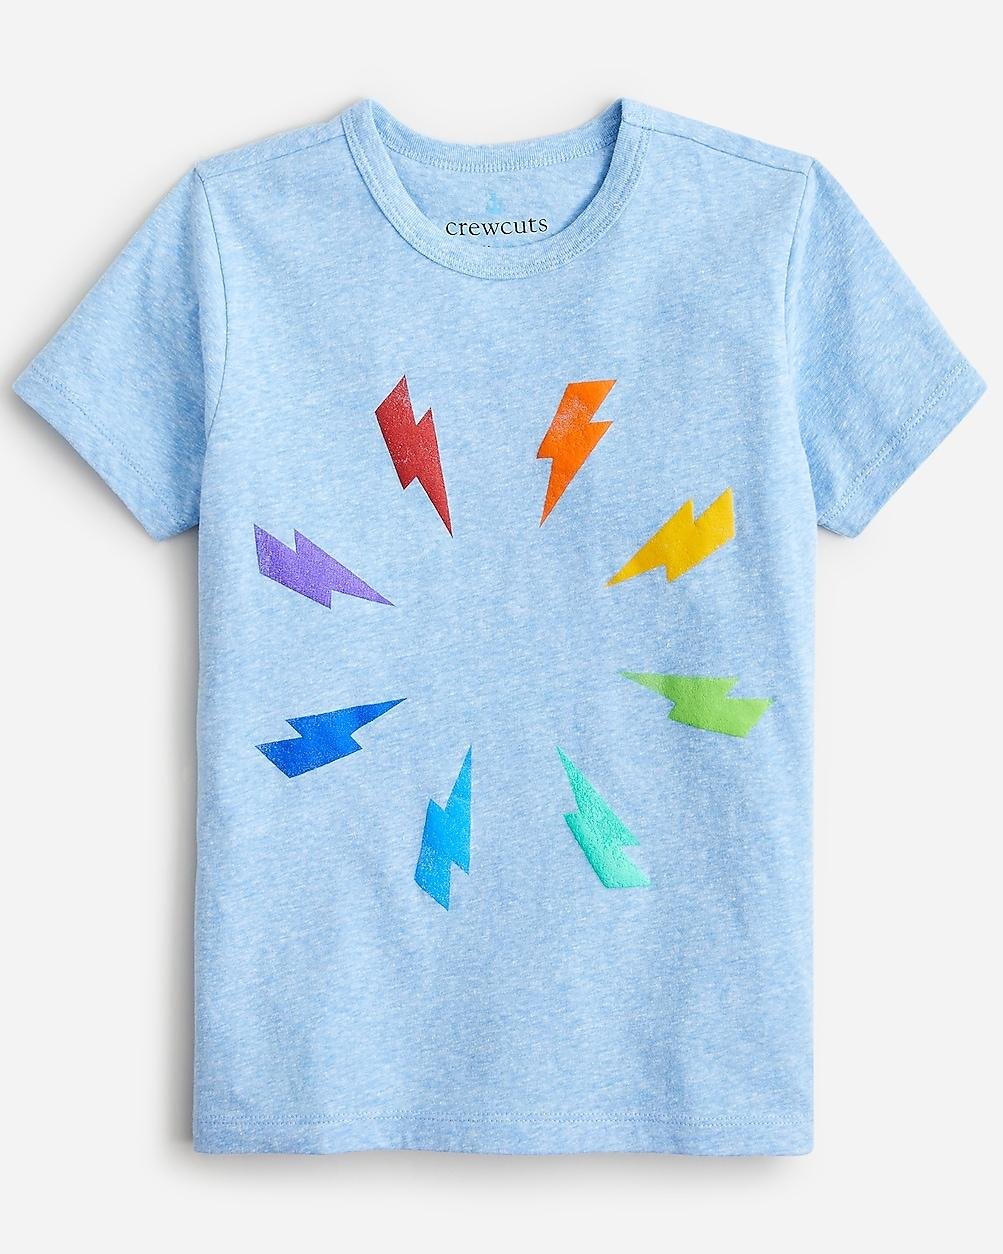 Kids' lightning graphic T-shirt by J.CREW